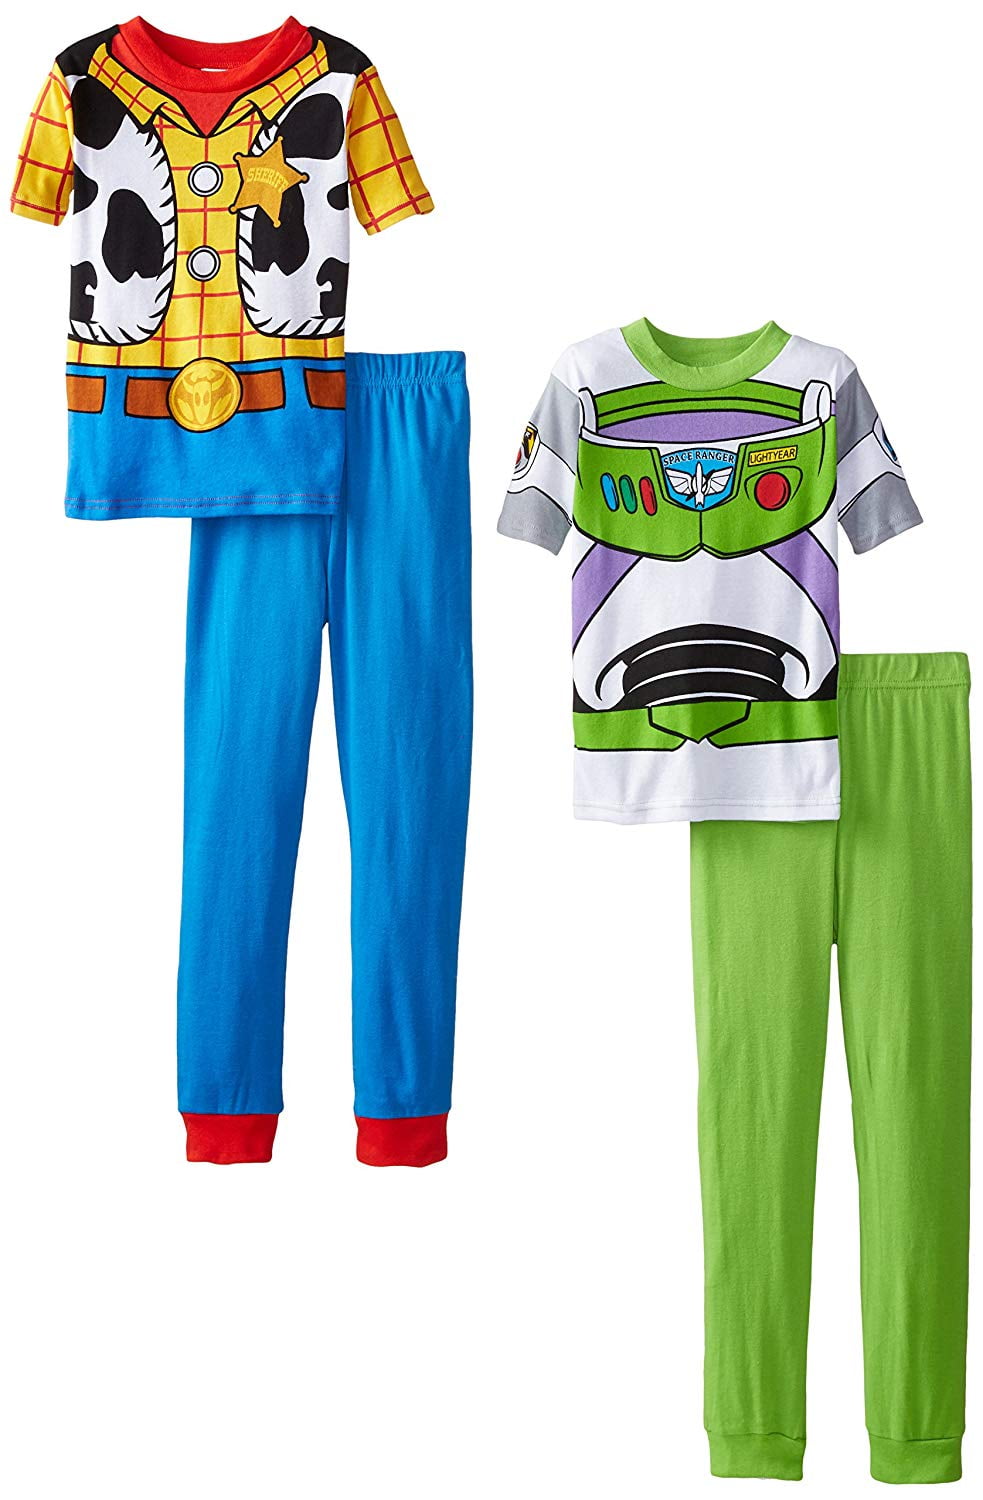 Buzz Lightyear Disney Toy Story 4 Boys Size L 10-12 Hooded Union Suit Pajamas 